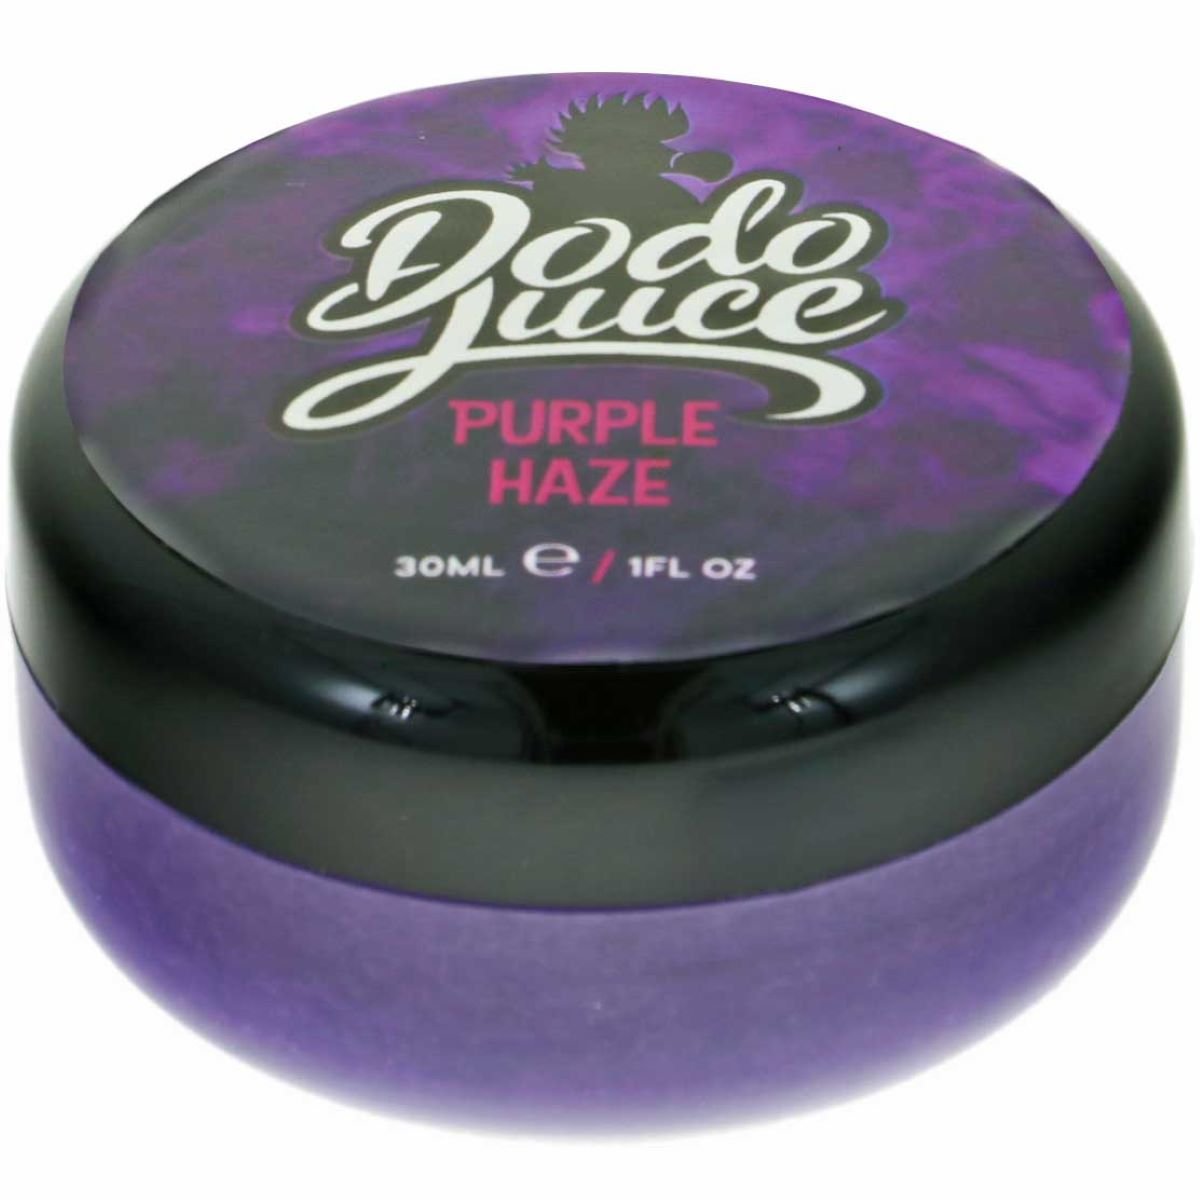 Purple Haze soft wax for dark coloured cars  - 30ml